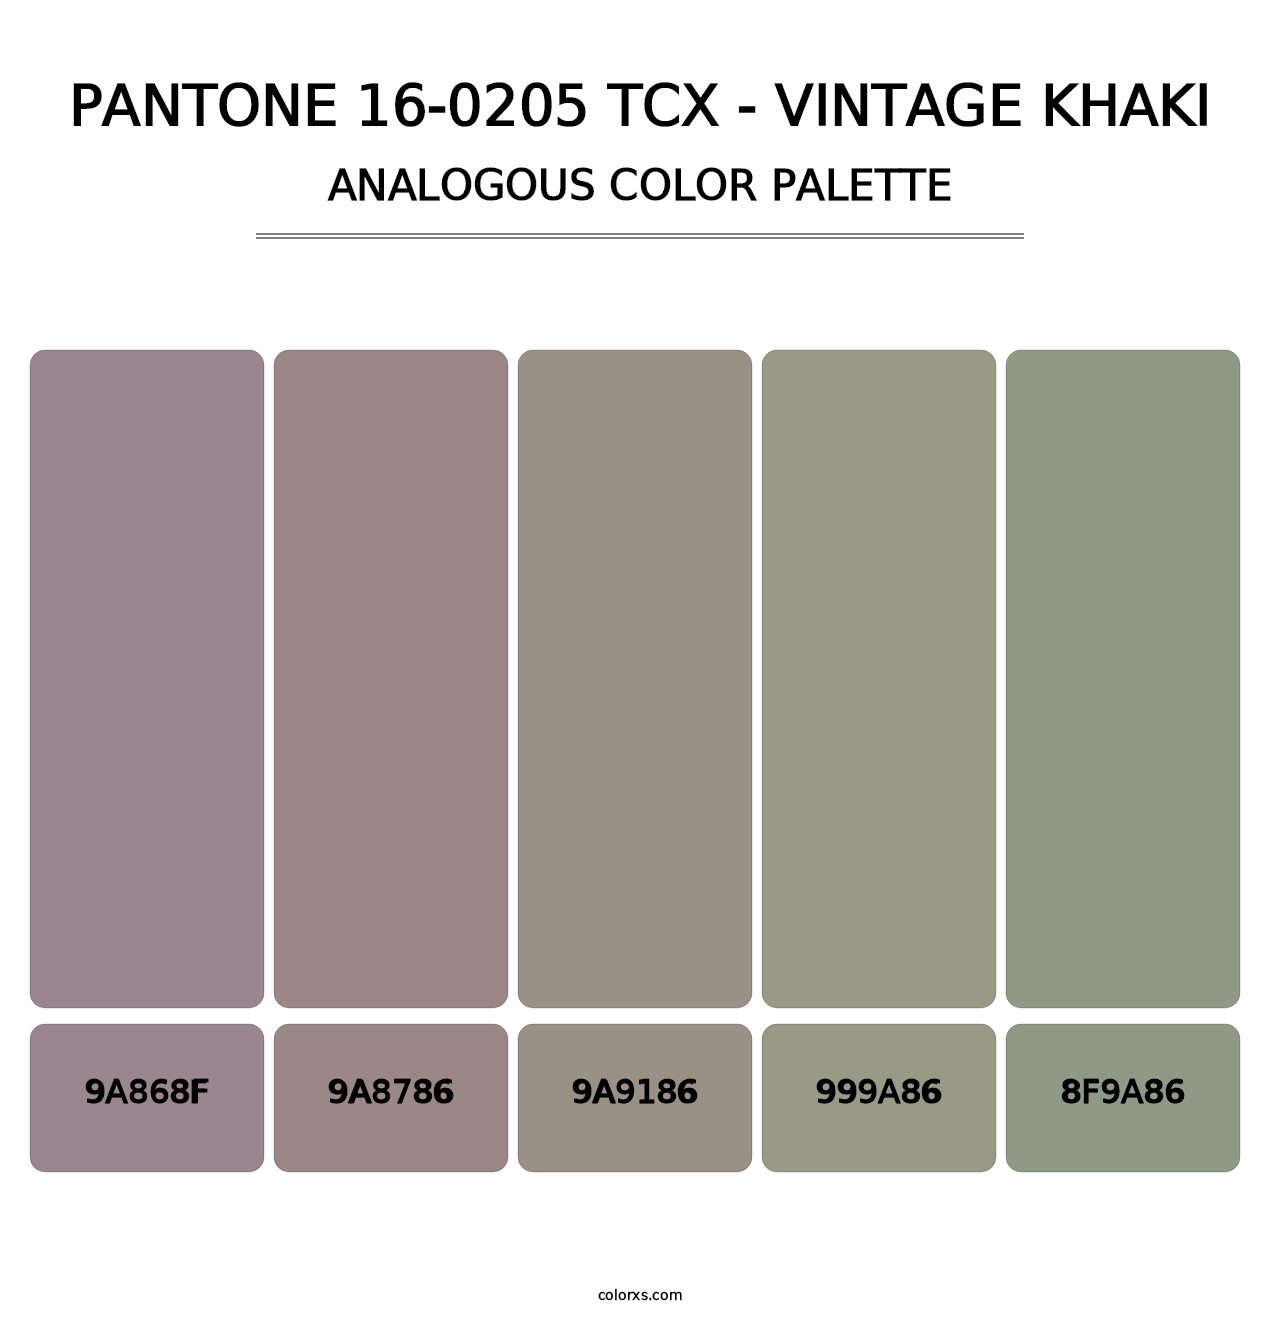 PANTONE 16-0205 TCX - Vintage Khaki - Analogous Color Palette